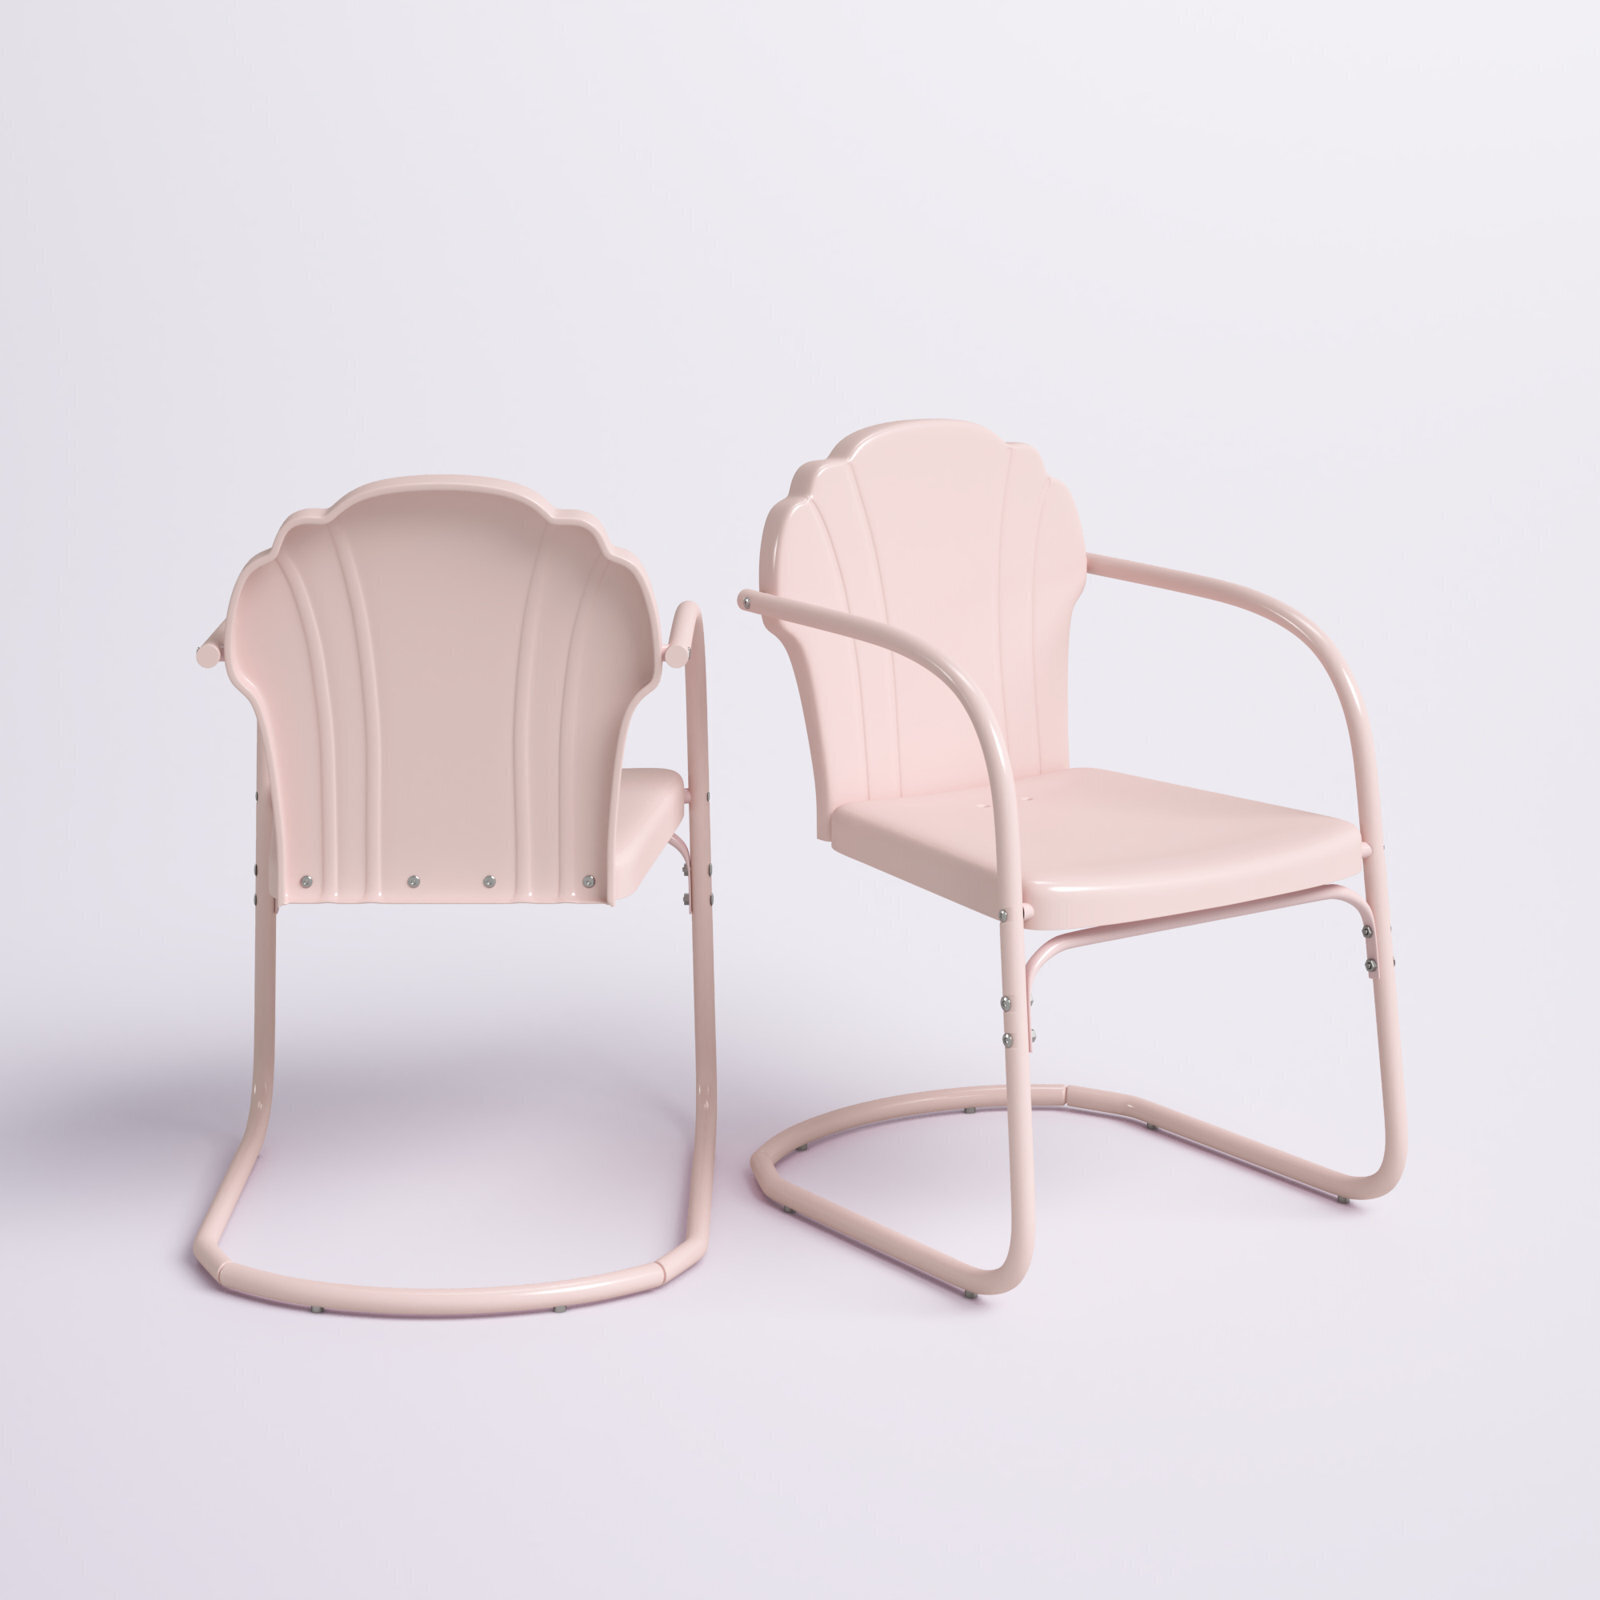 Retro Style Pink Garden Chairs 